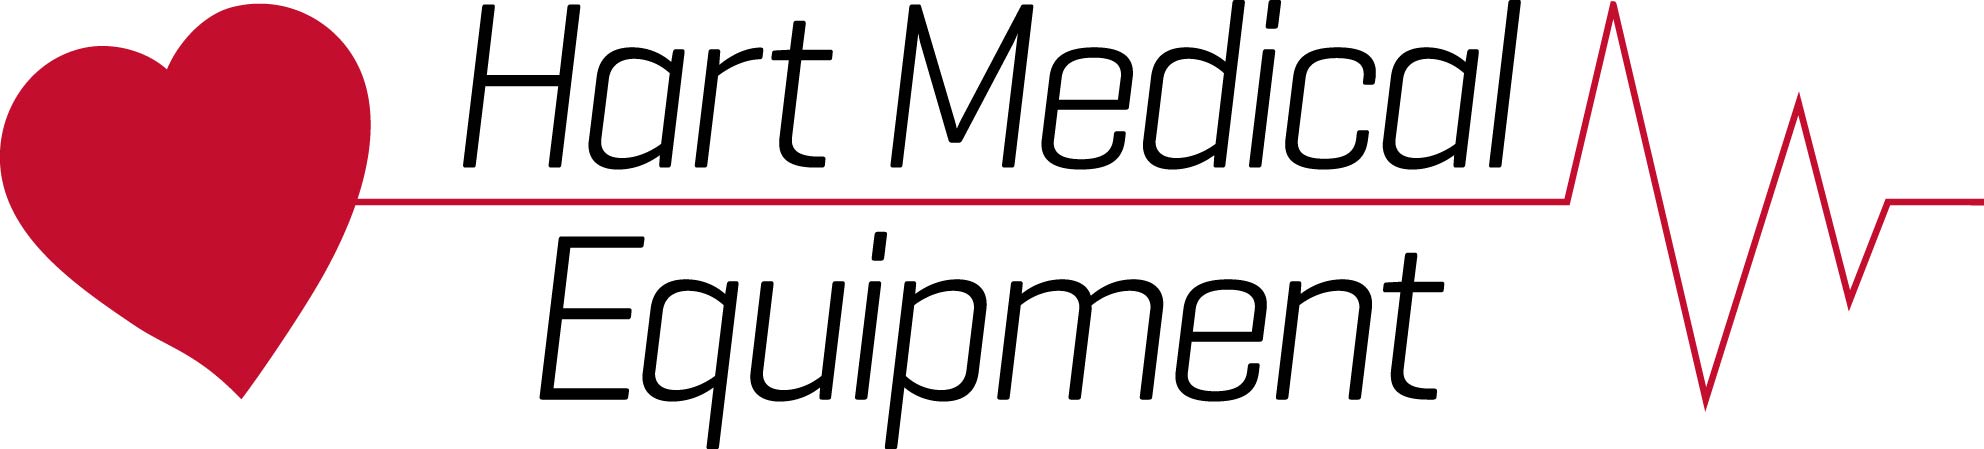 Hart Medical Equipment